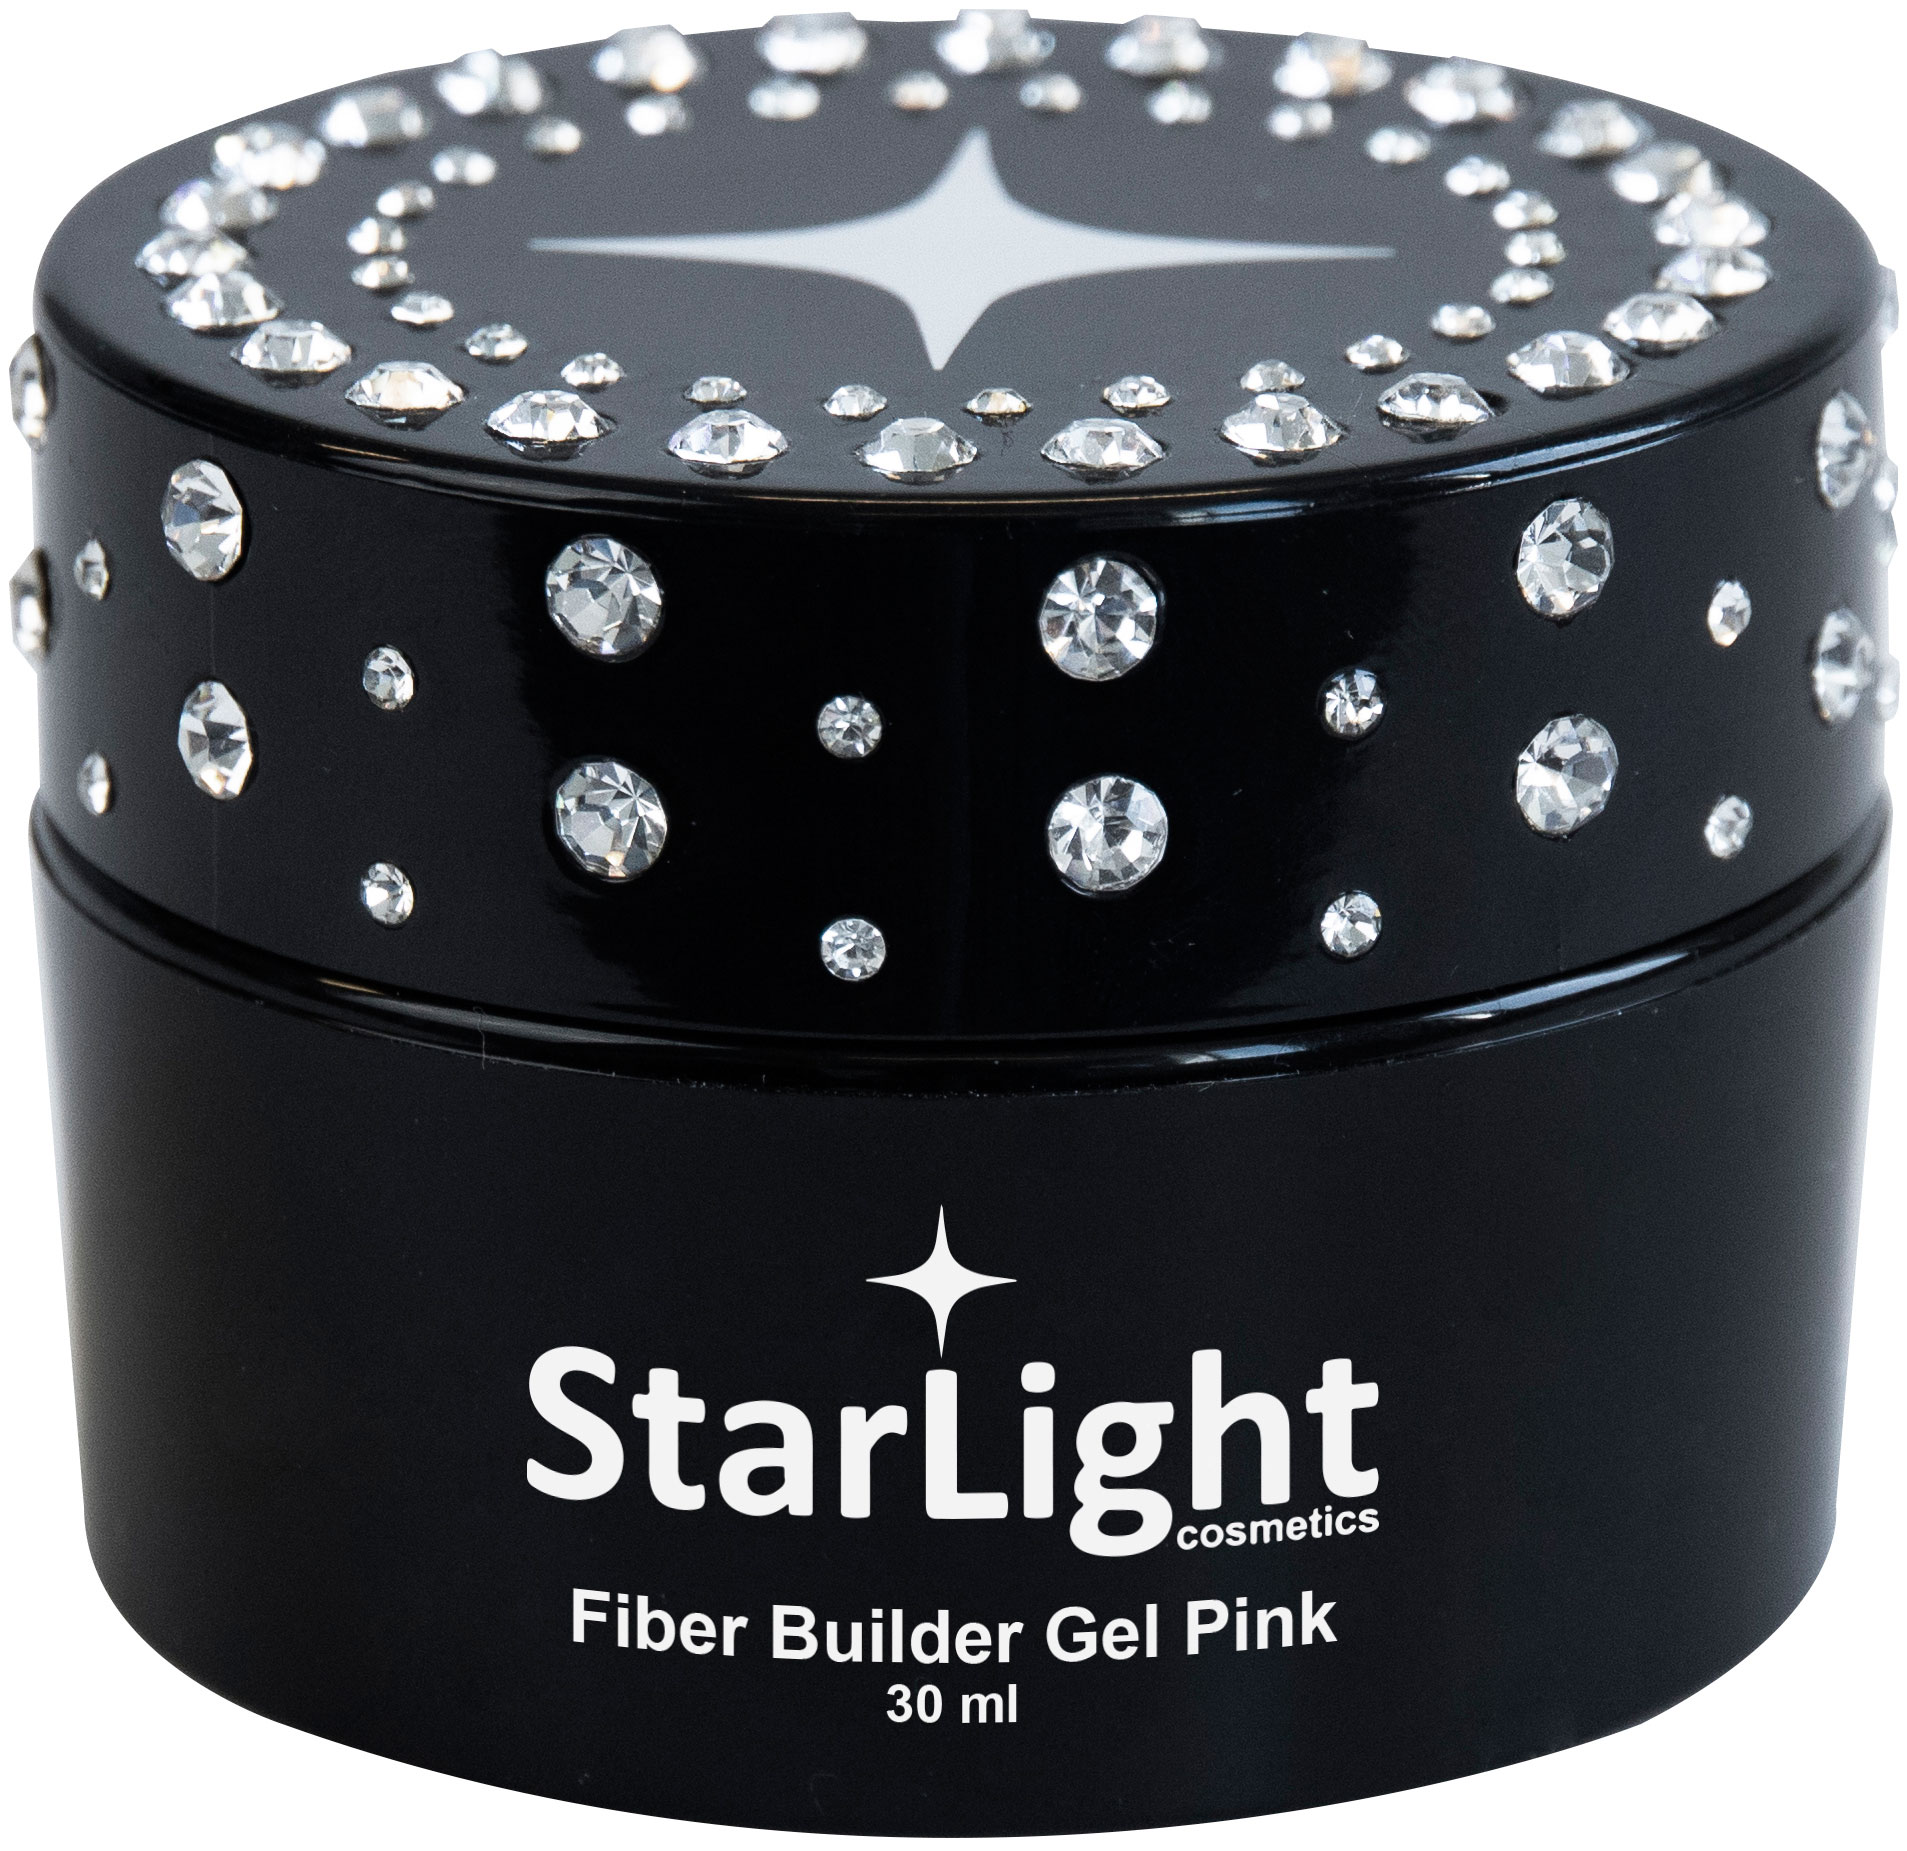 Naglar Fiber Builder Gel Pink - 30 ml (Transparent)